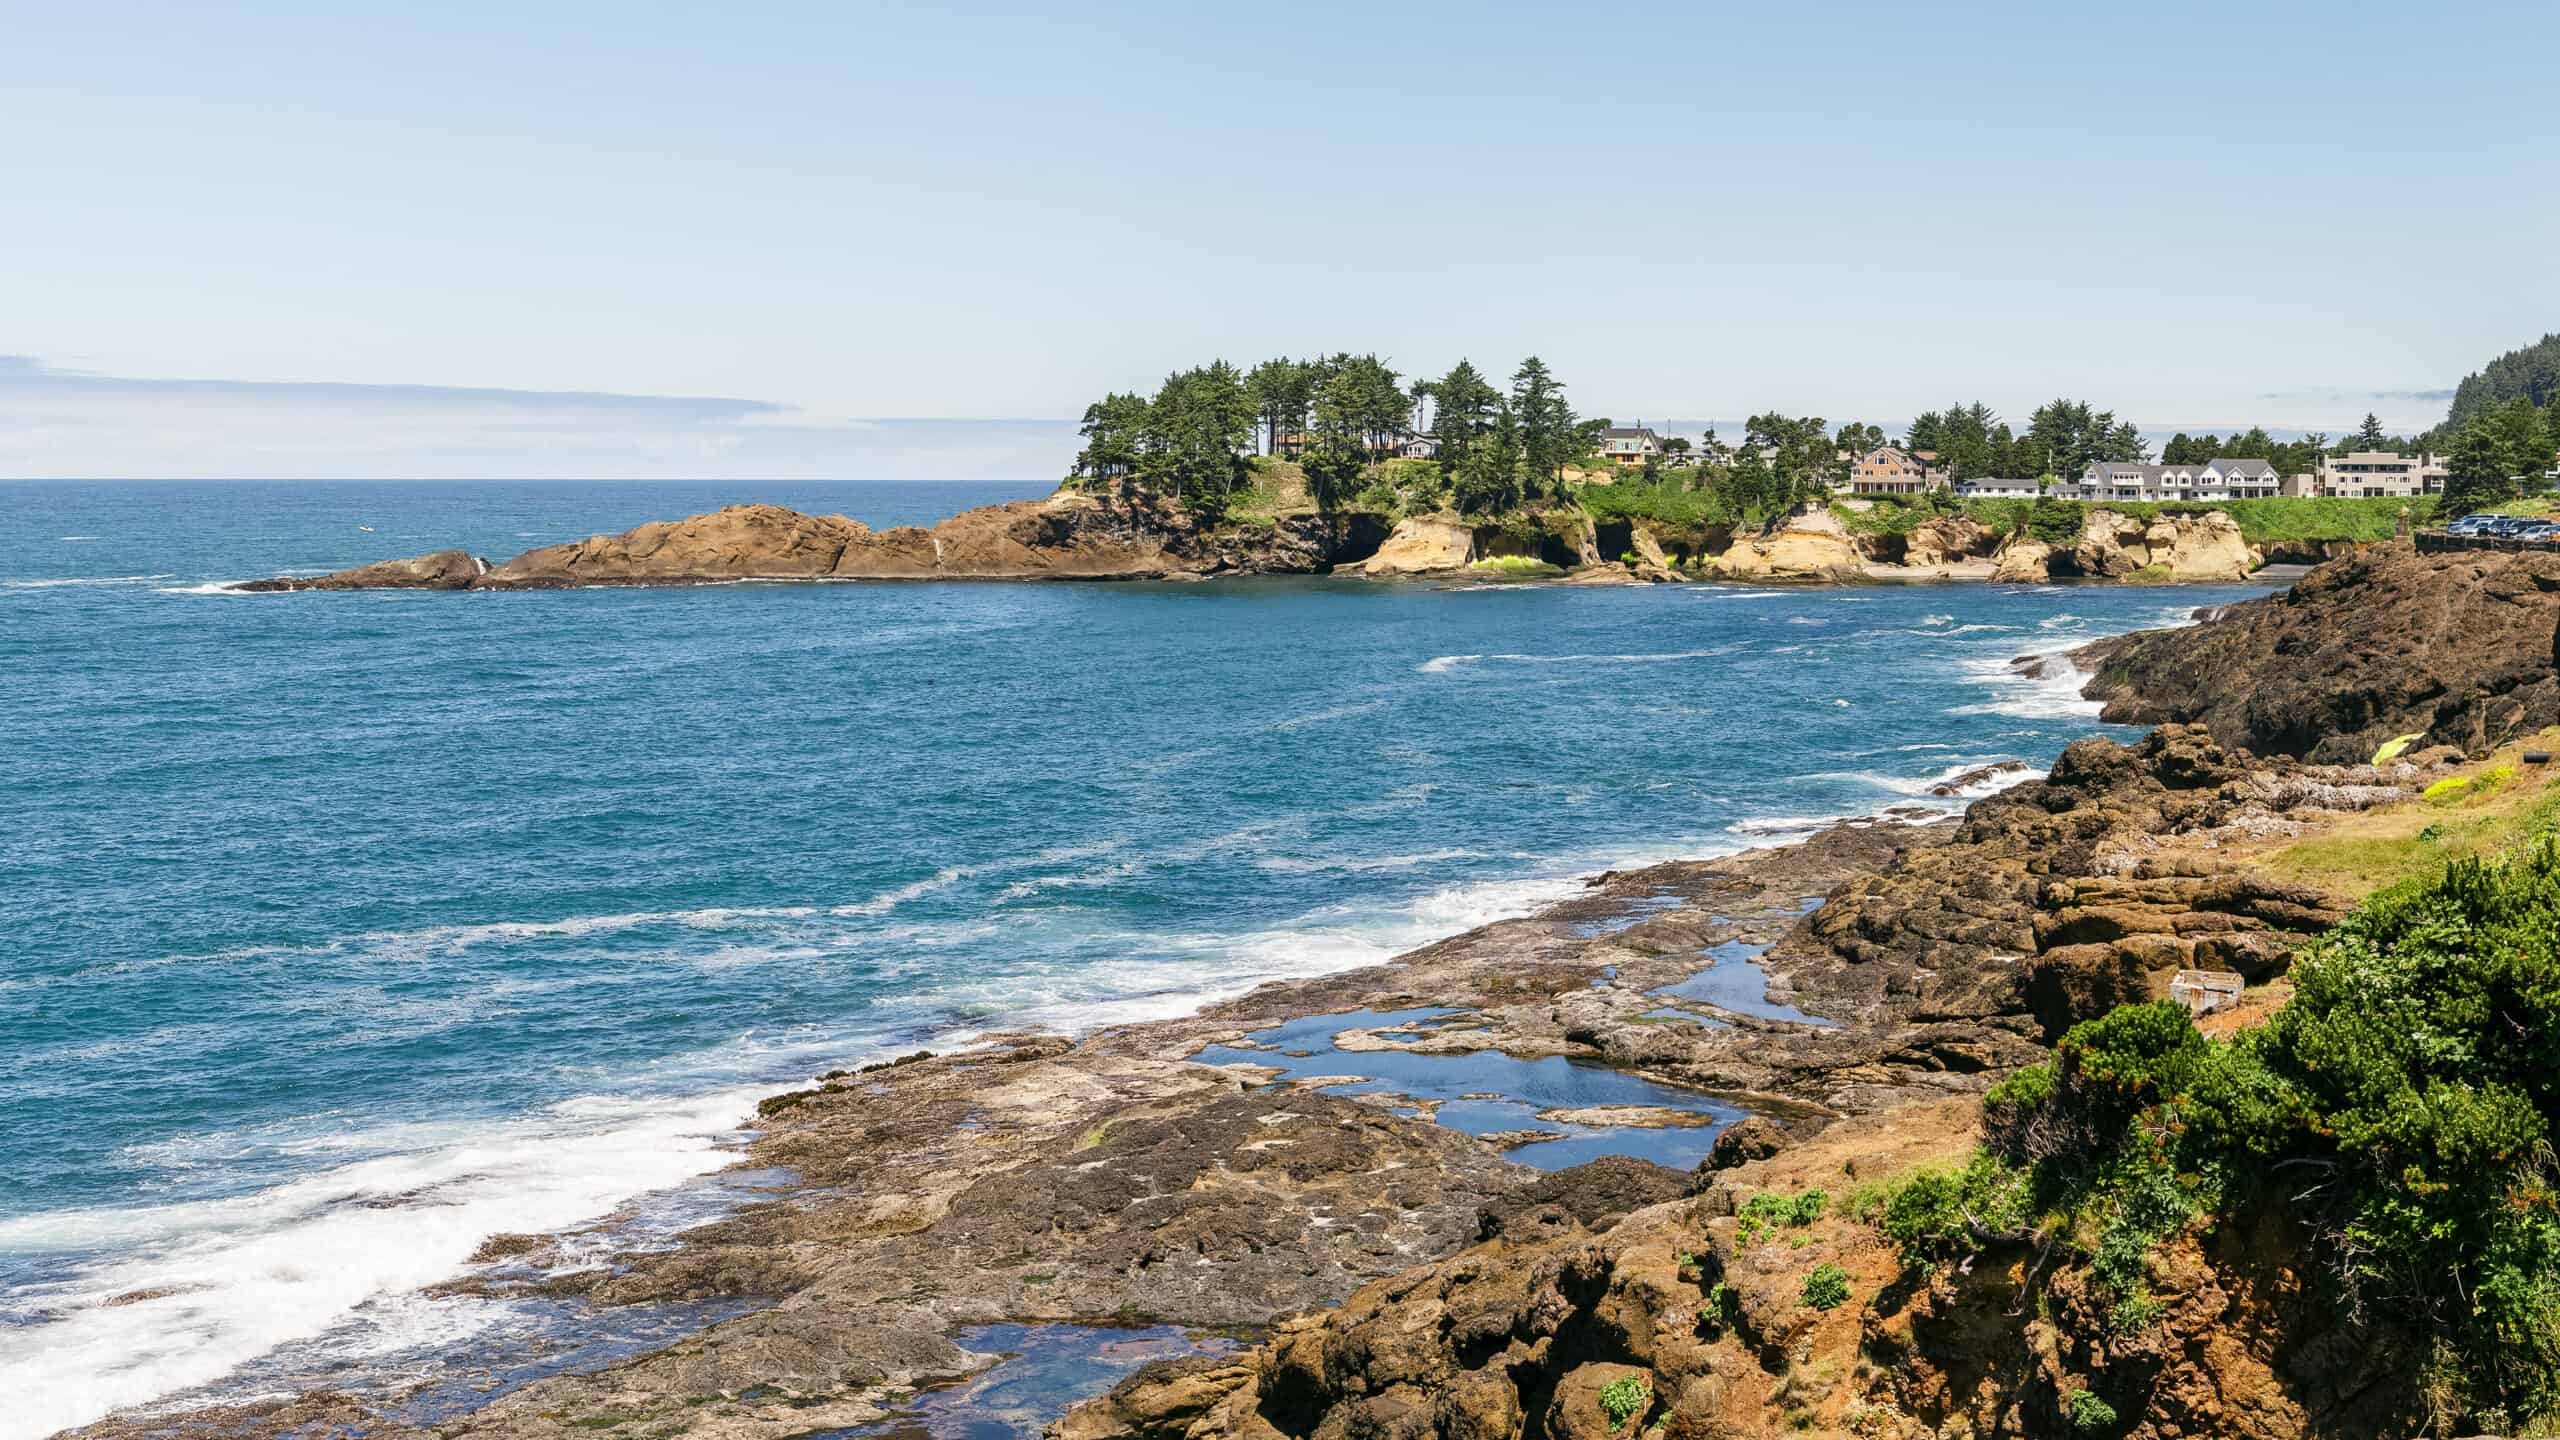 Panorama view of rocky coastline of Oregon coast